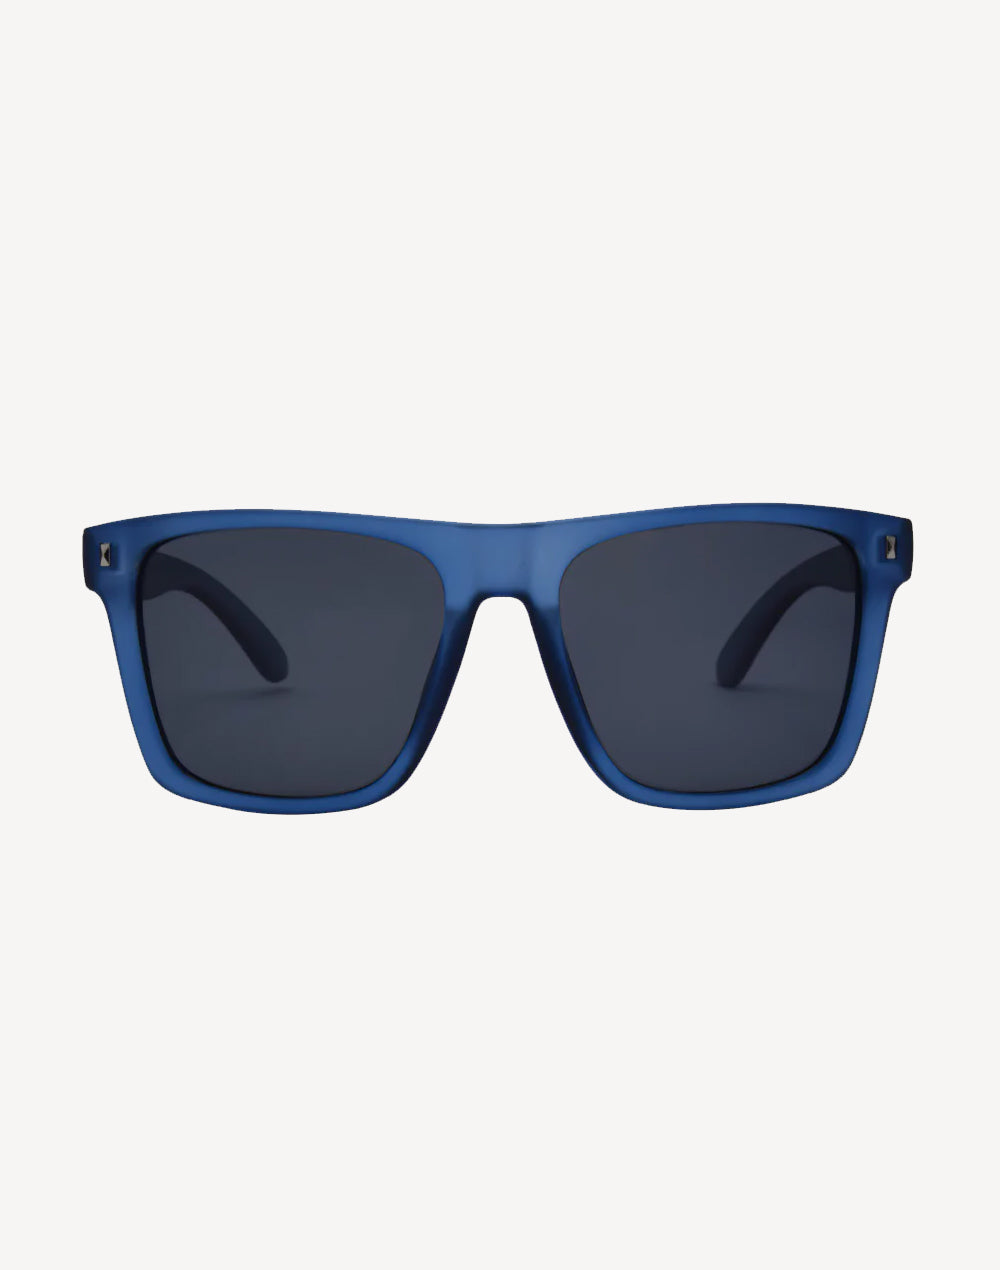 Limits Polarized Sunglasses#color_limits-storm-blue-smoke